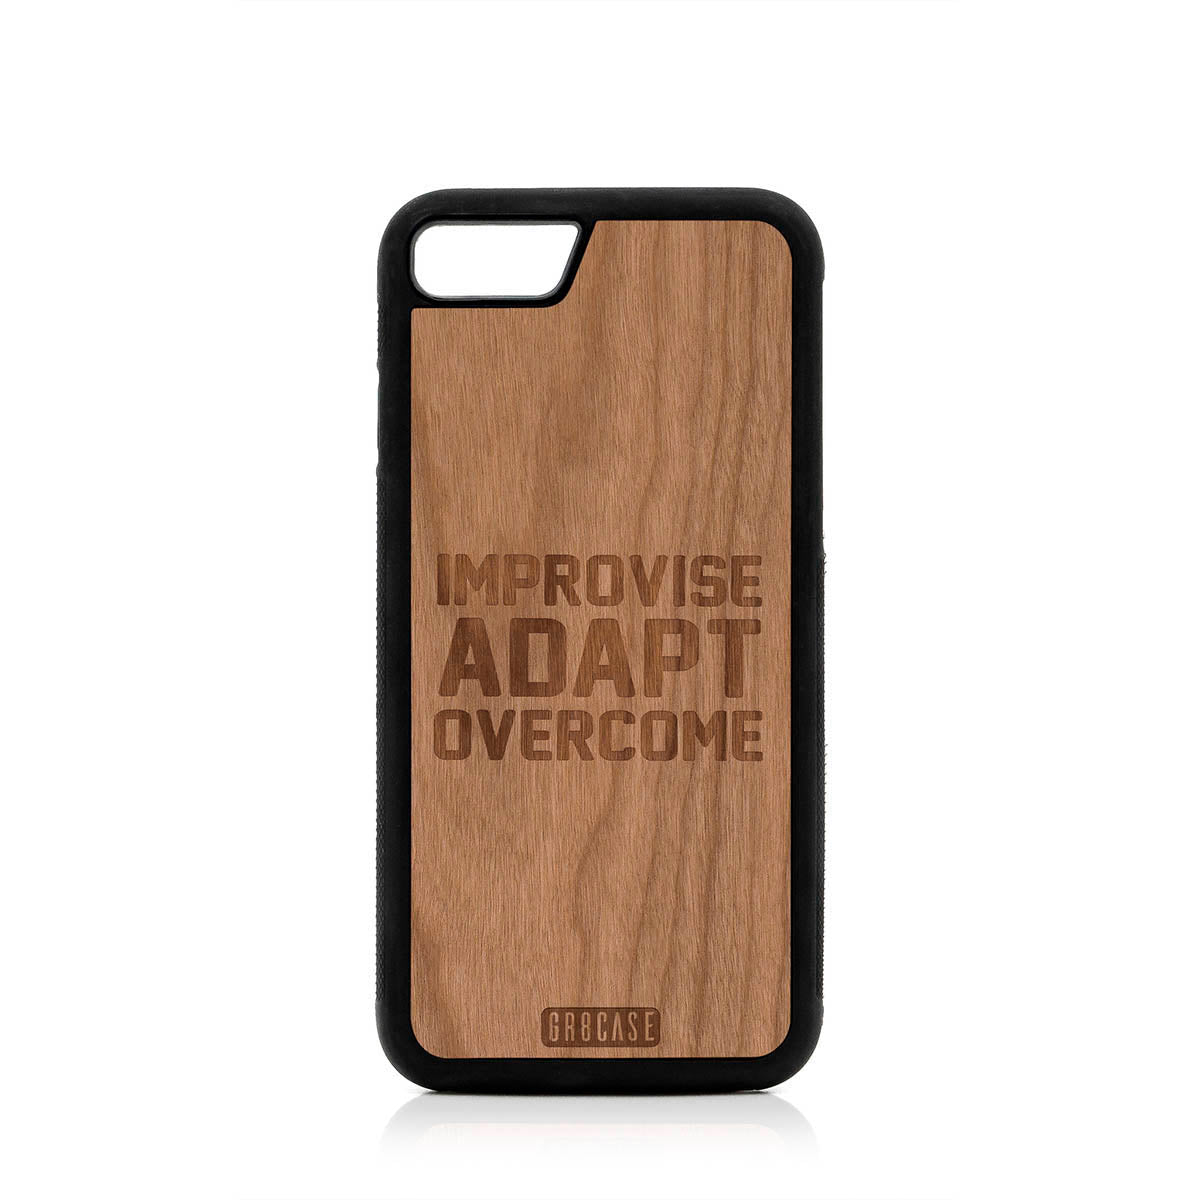 Improvise Adapt Overcome Design Wood Case For iPhone 7/8